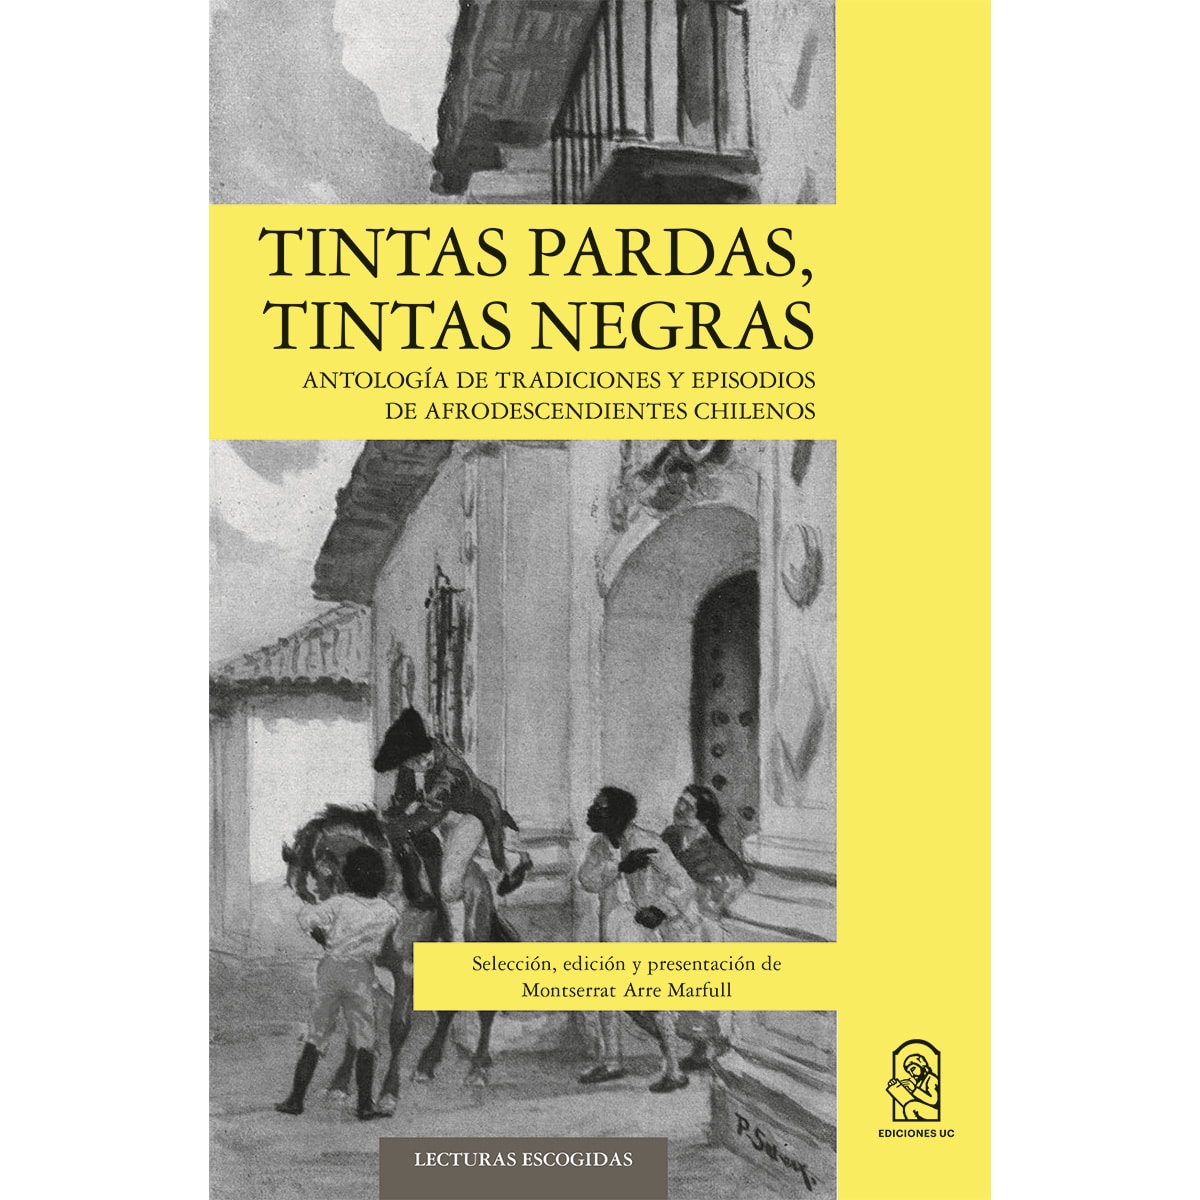 Cover image for Tintas pardas, tintas negras